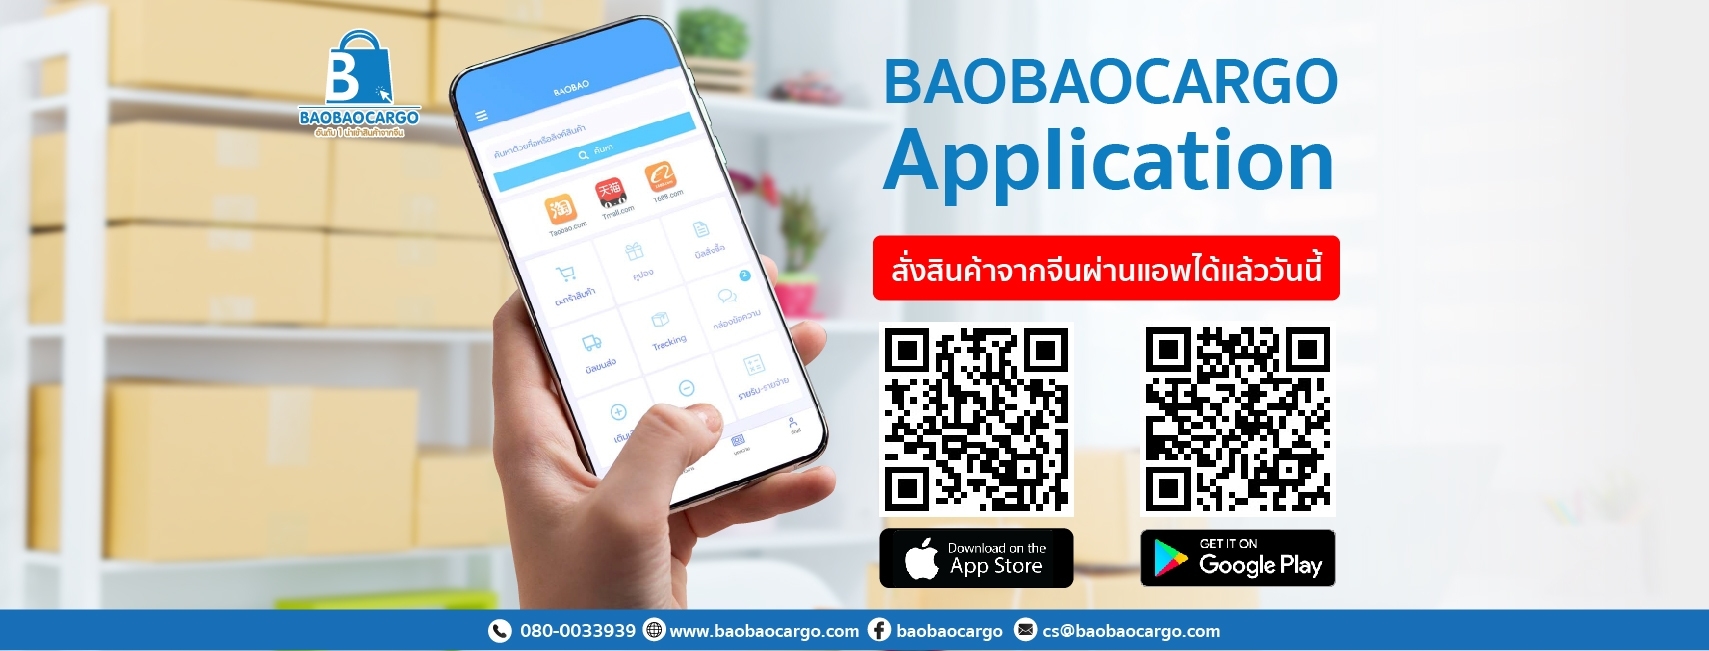 Baobao Cargo App